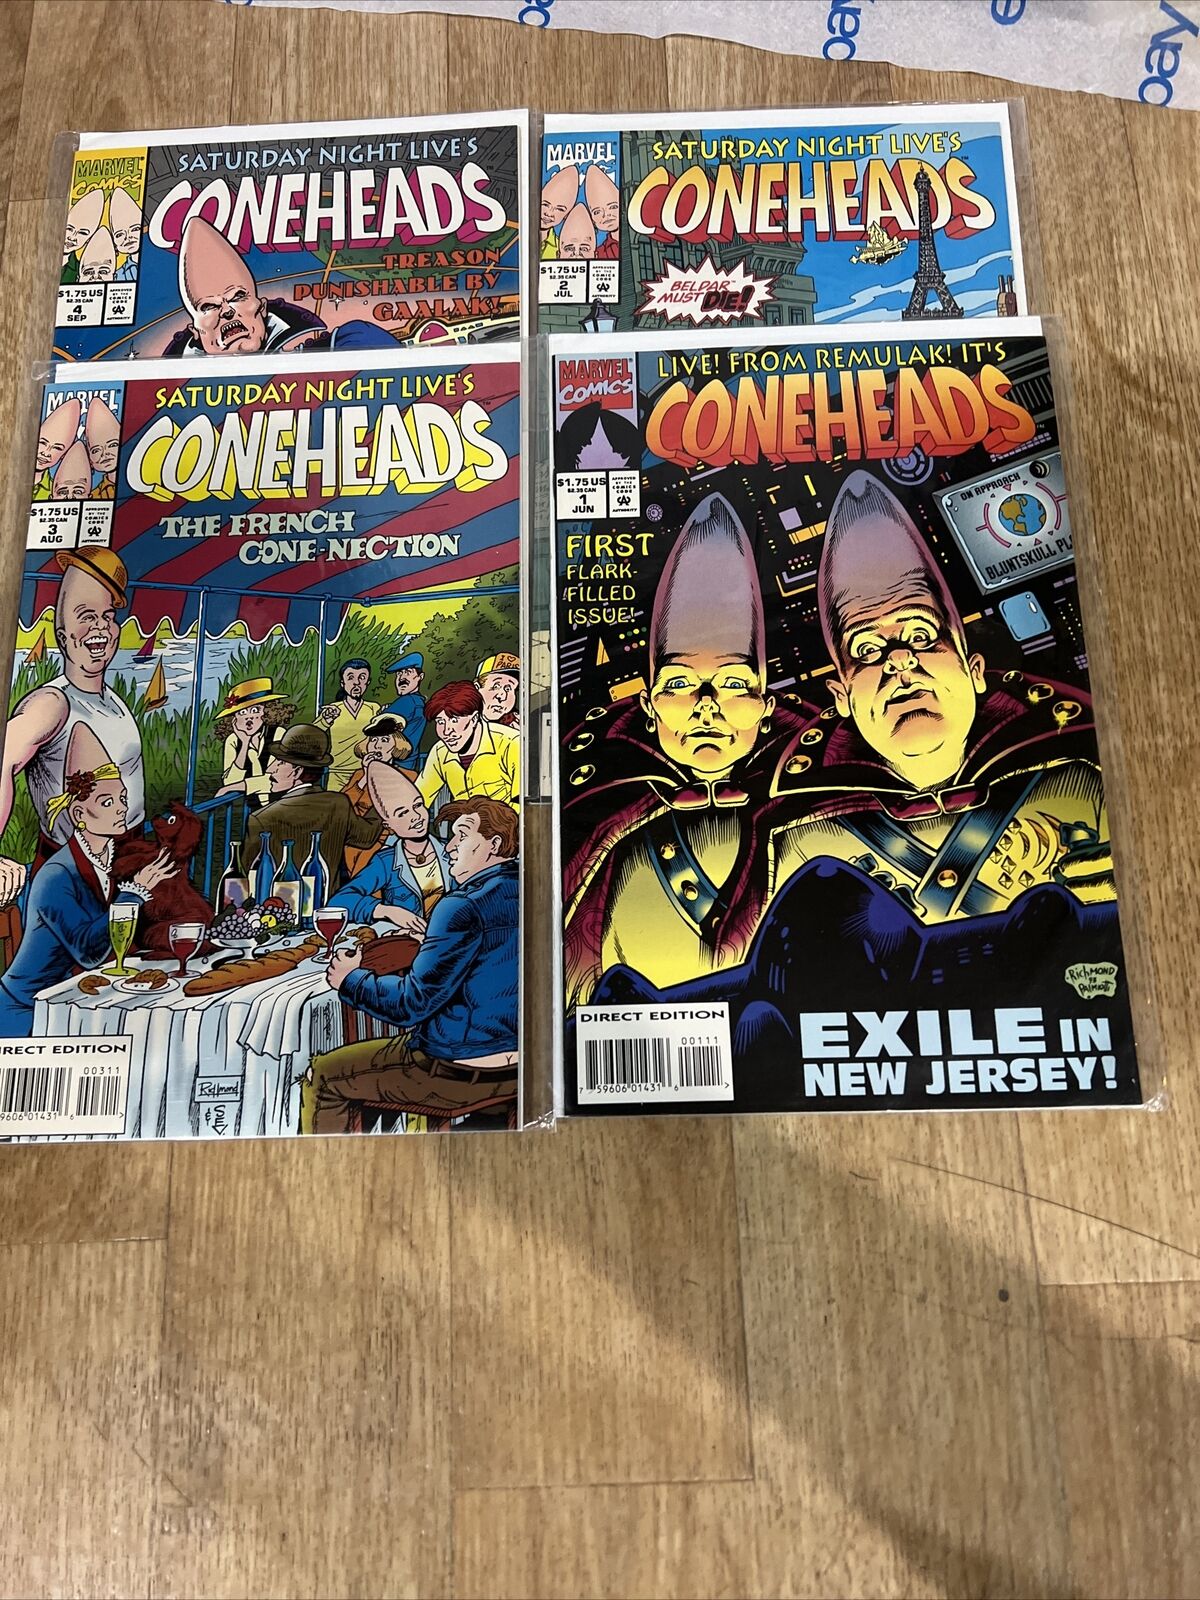 CONEHEADS (1994) #1, 2, 3, 4 Marvel Comics VF/NM Complete Run